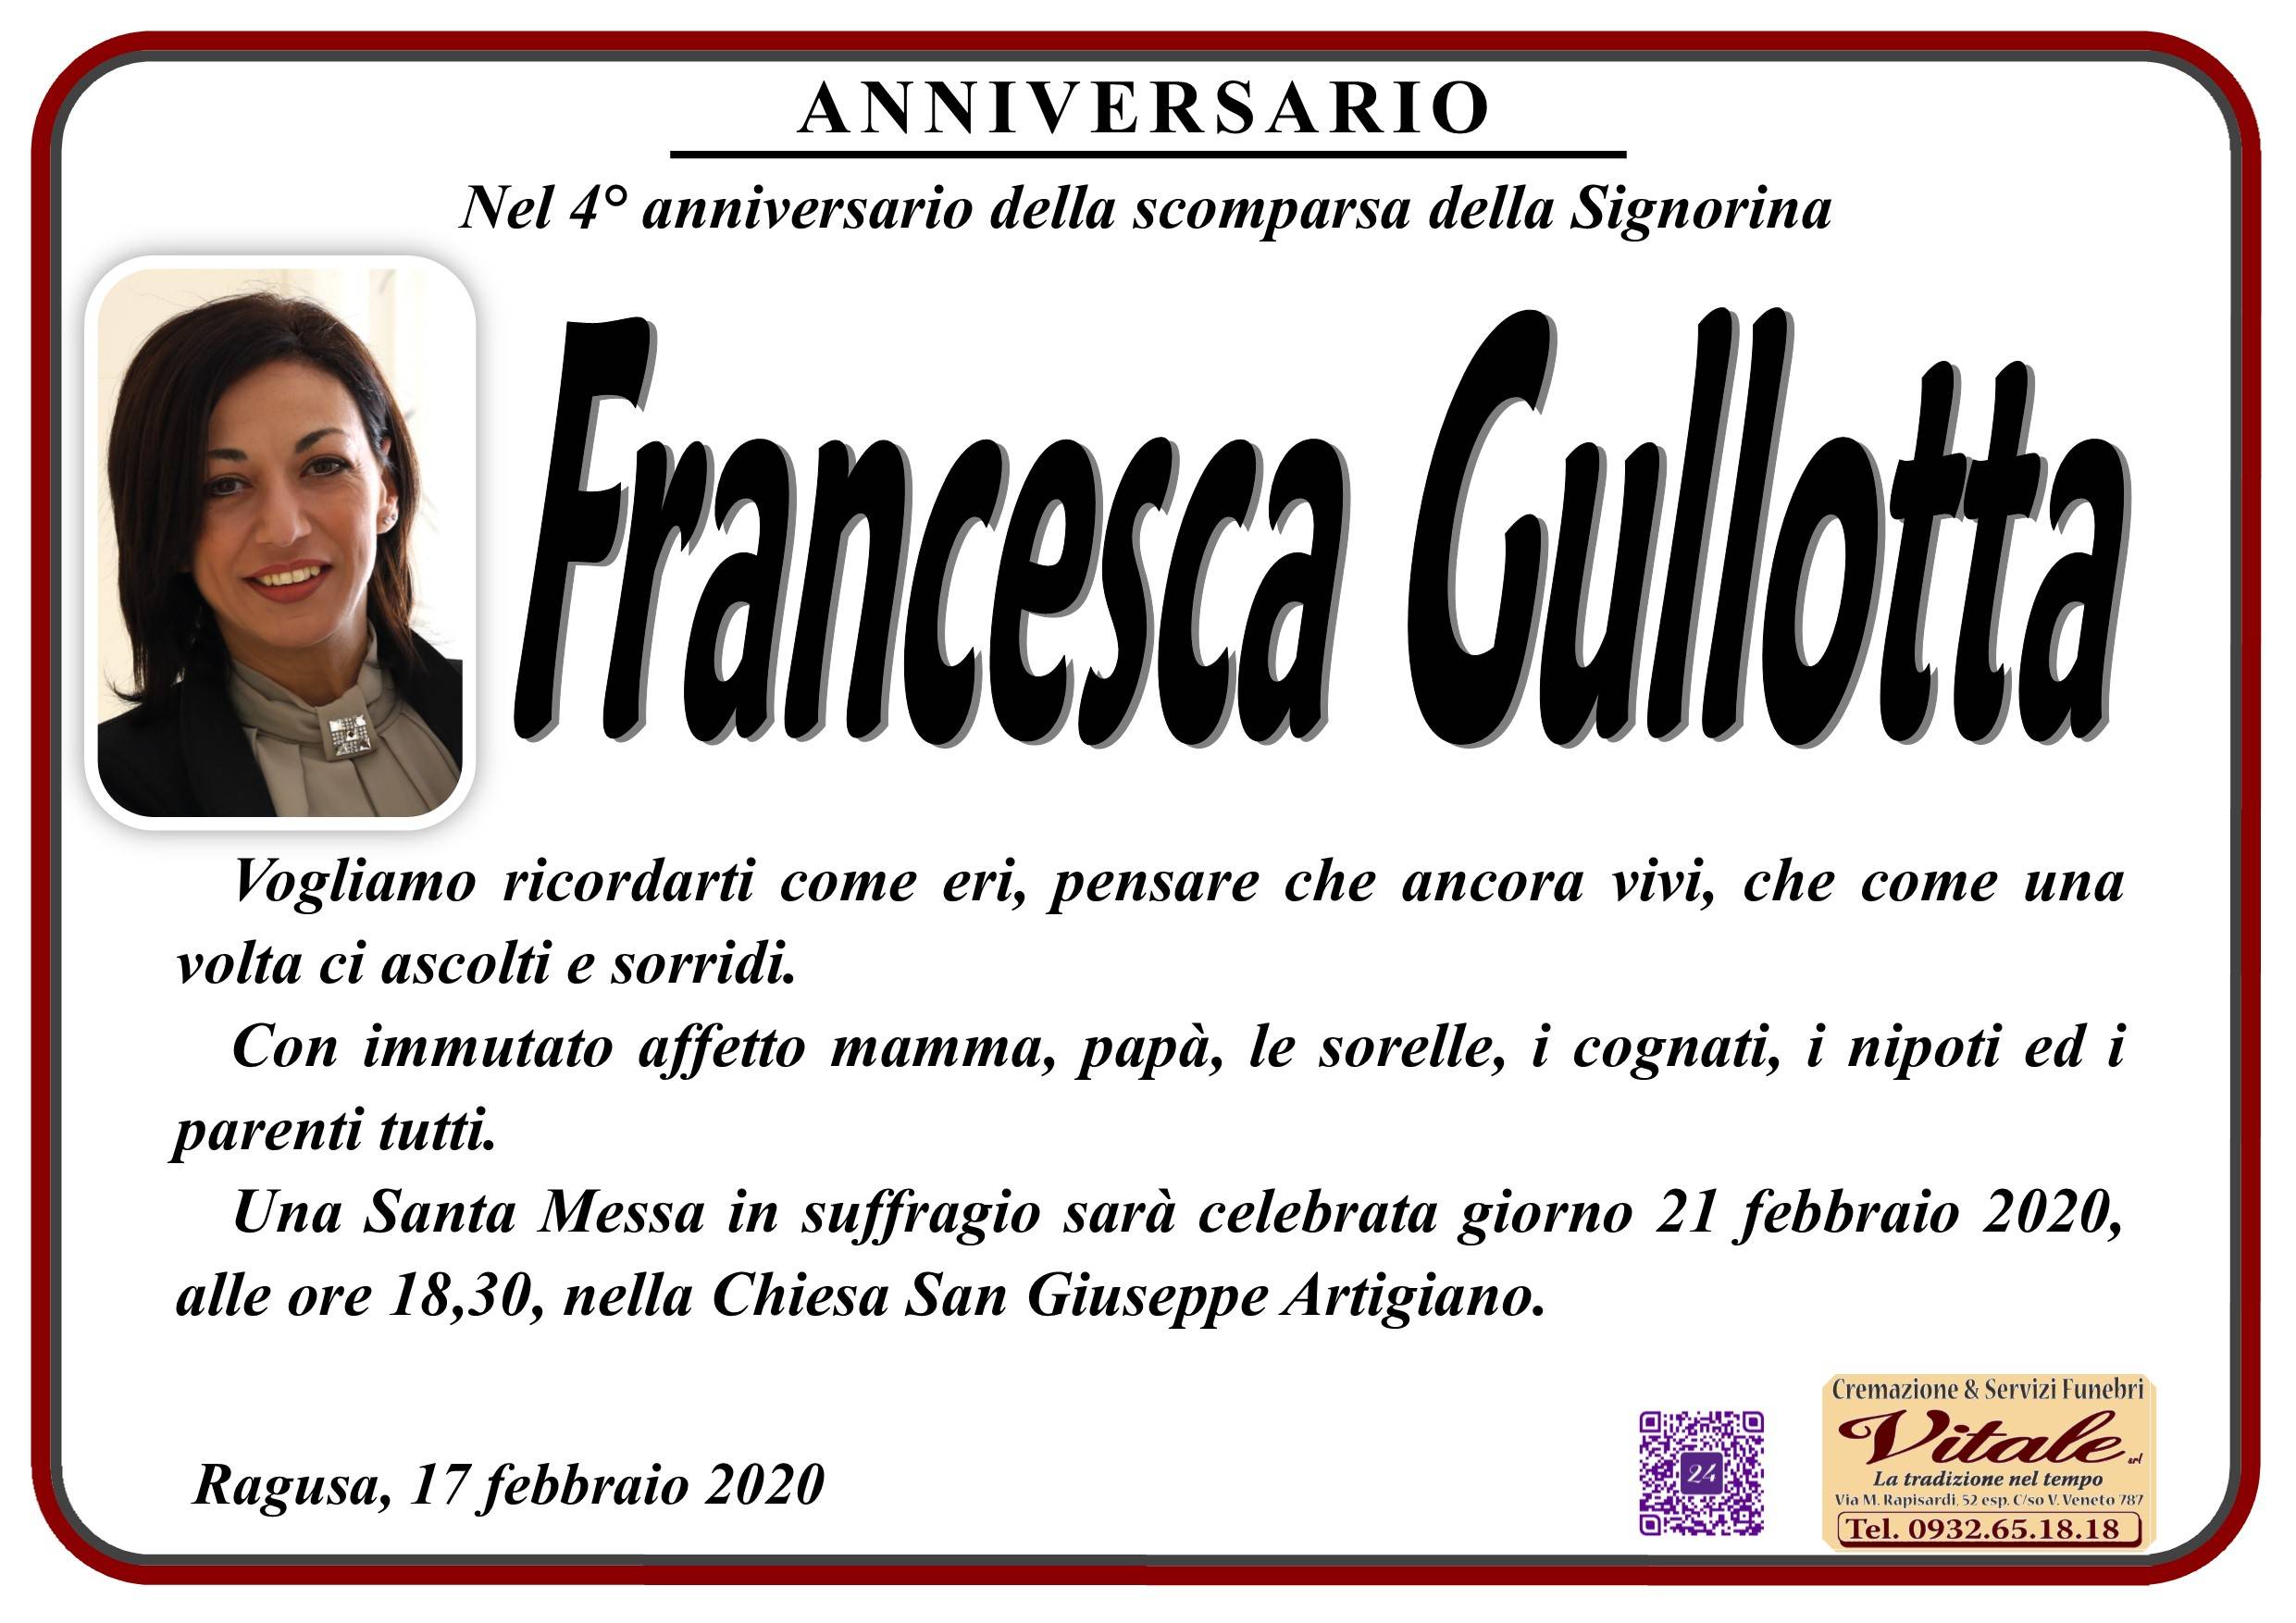 Francesca Gullotta